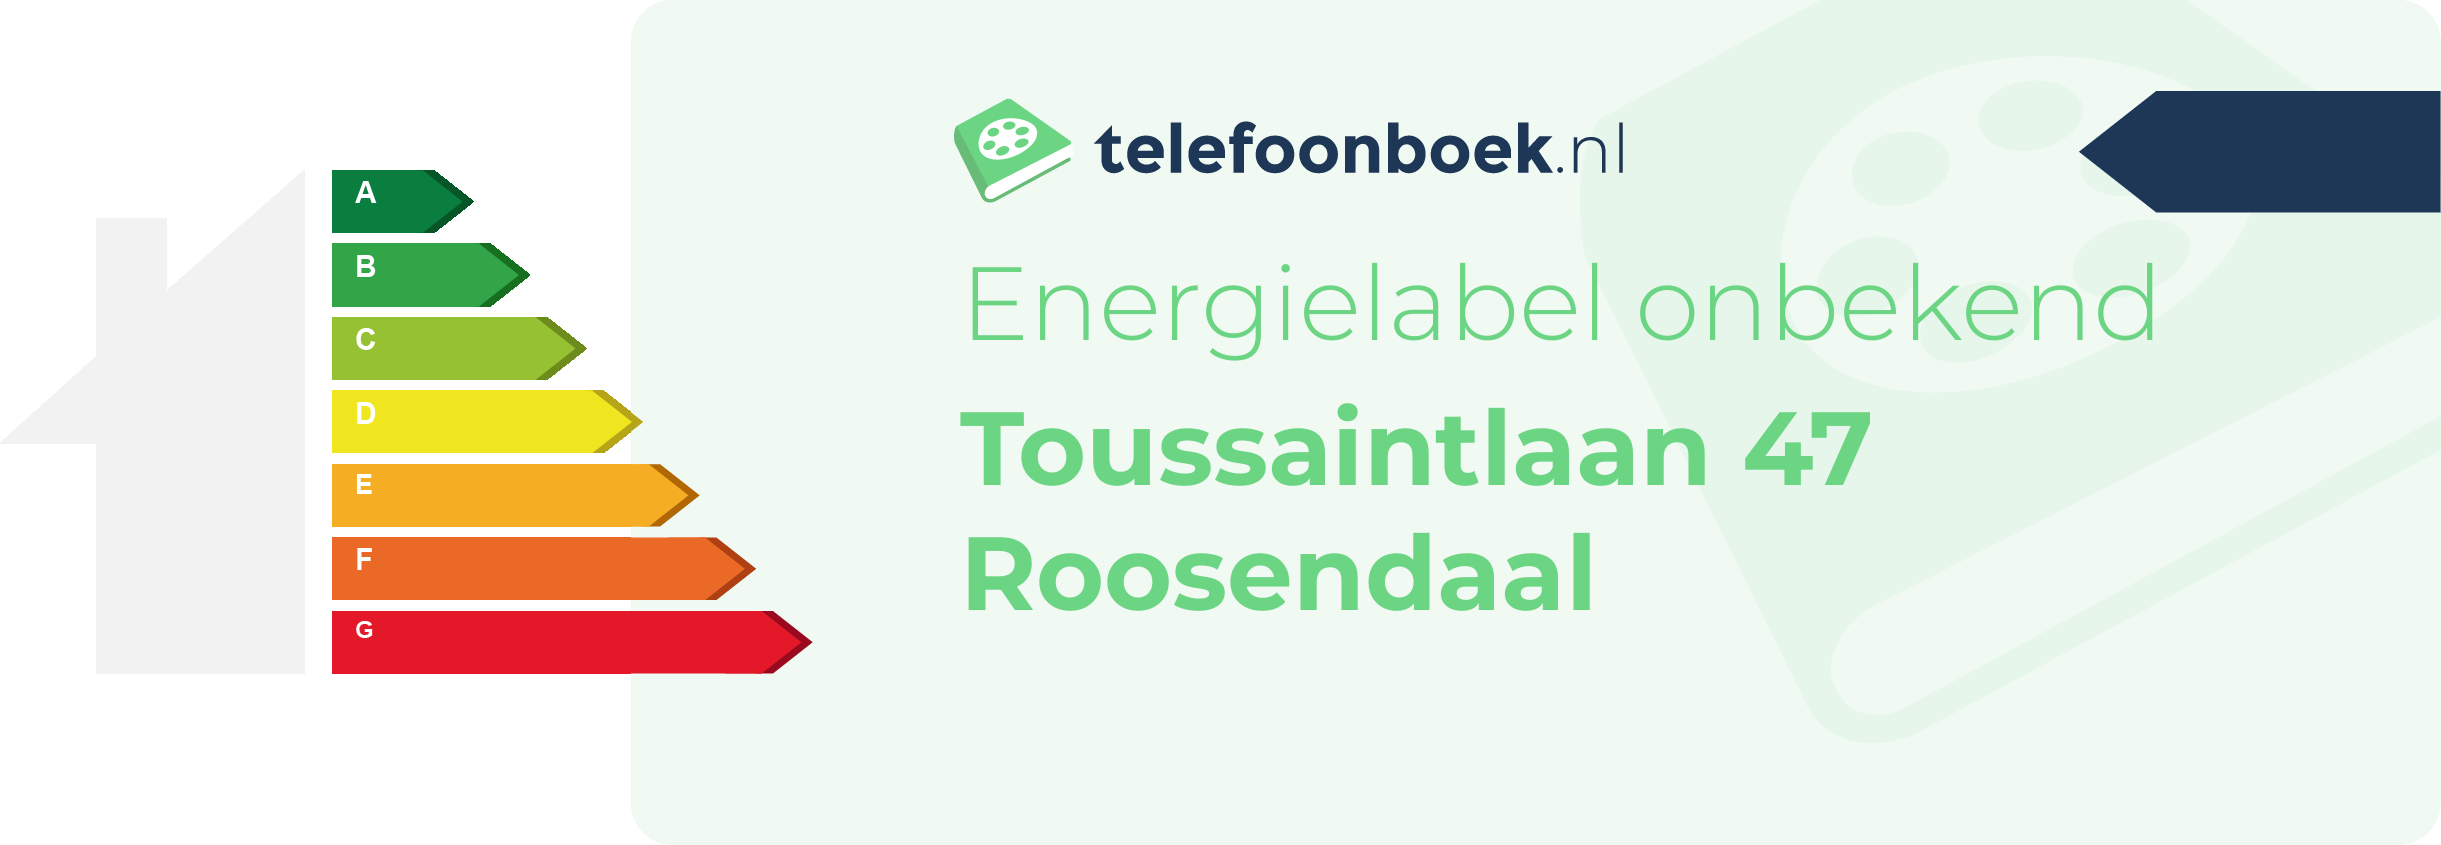 Energielabel Toussaintlaan 47 Roosendaal